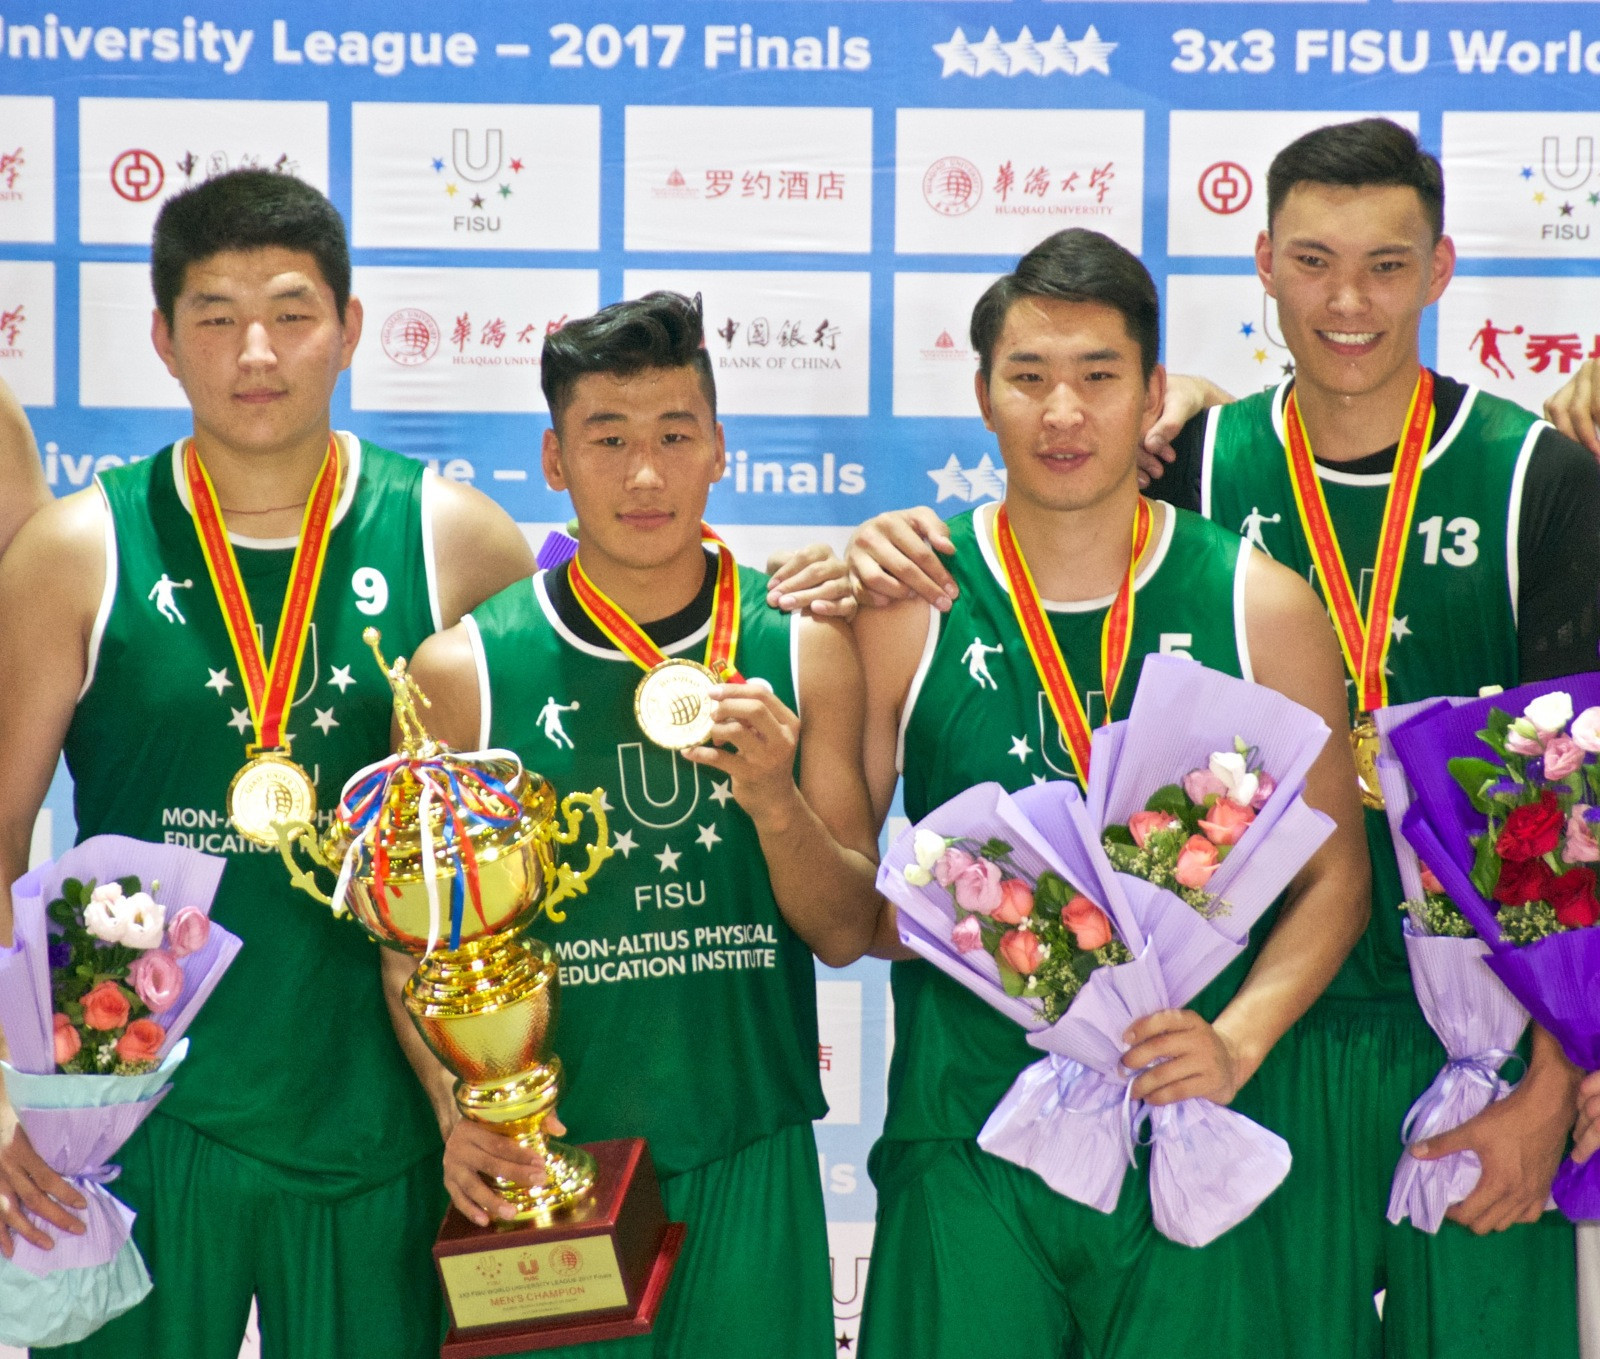 Mongolian and Chinese Taipei teams claim World 3x3 Basketball University League titles